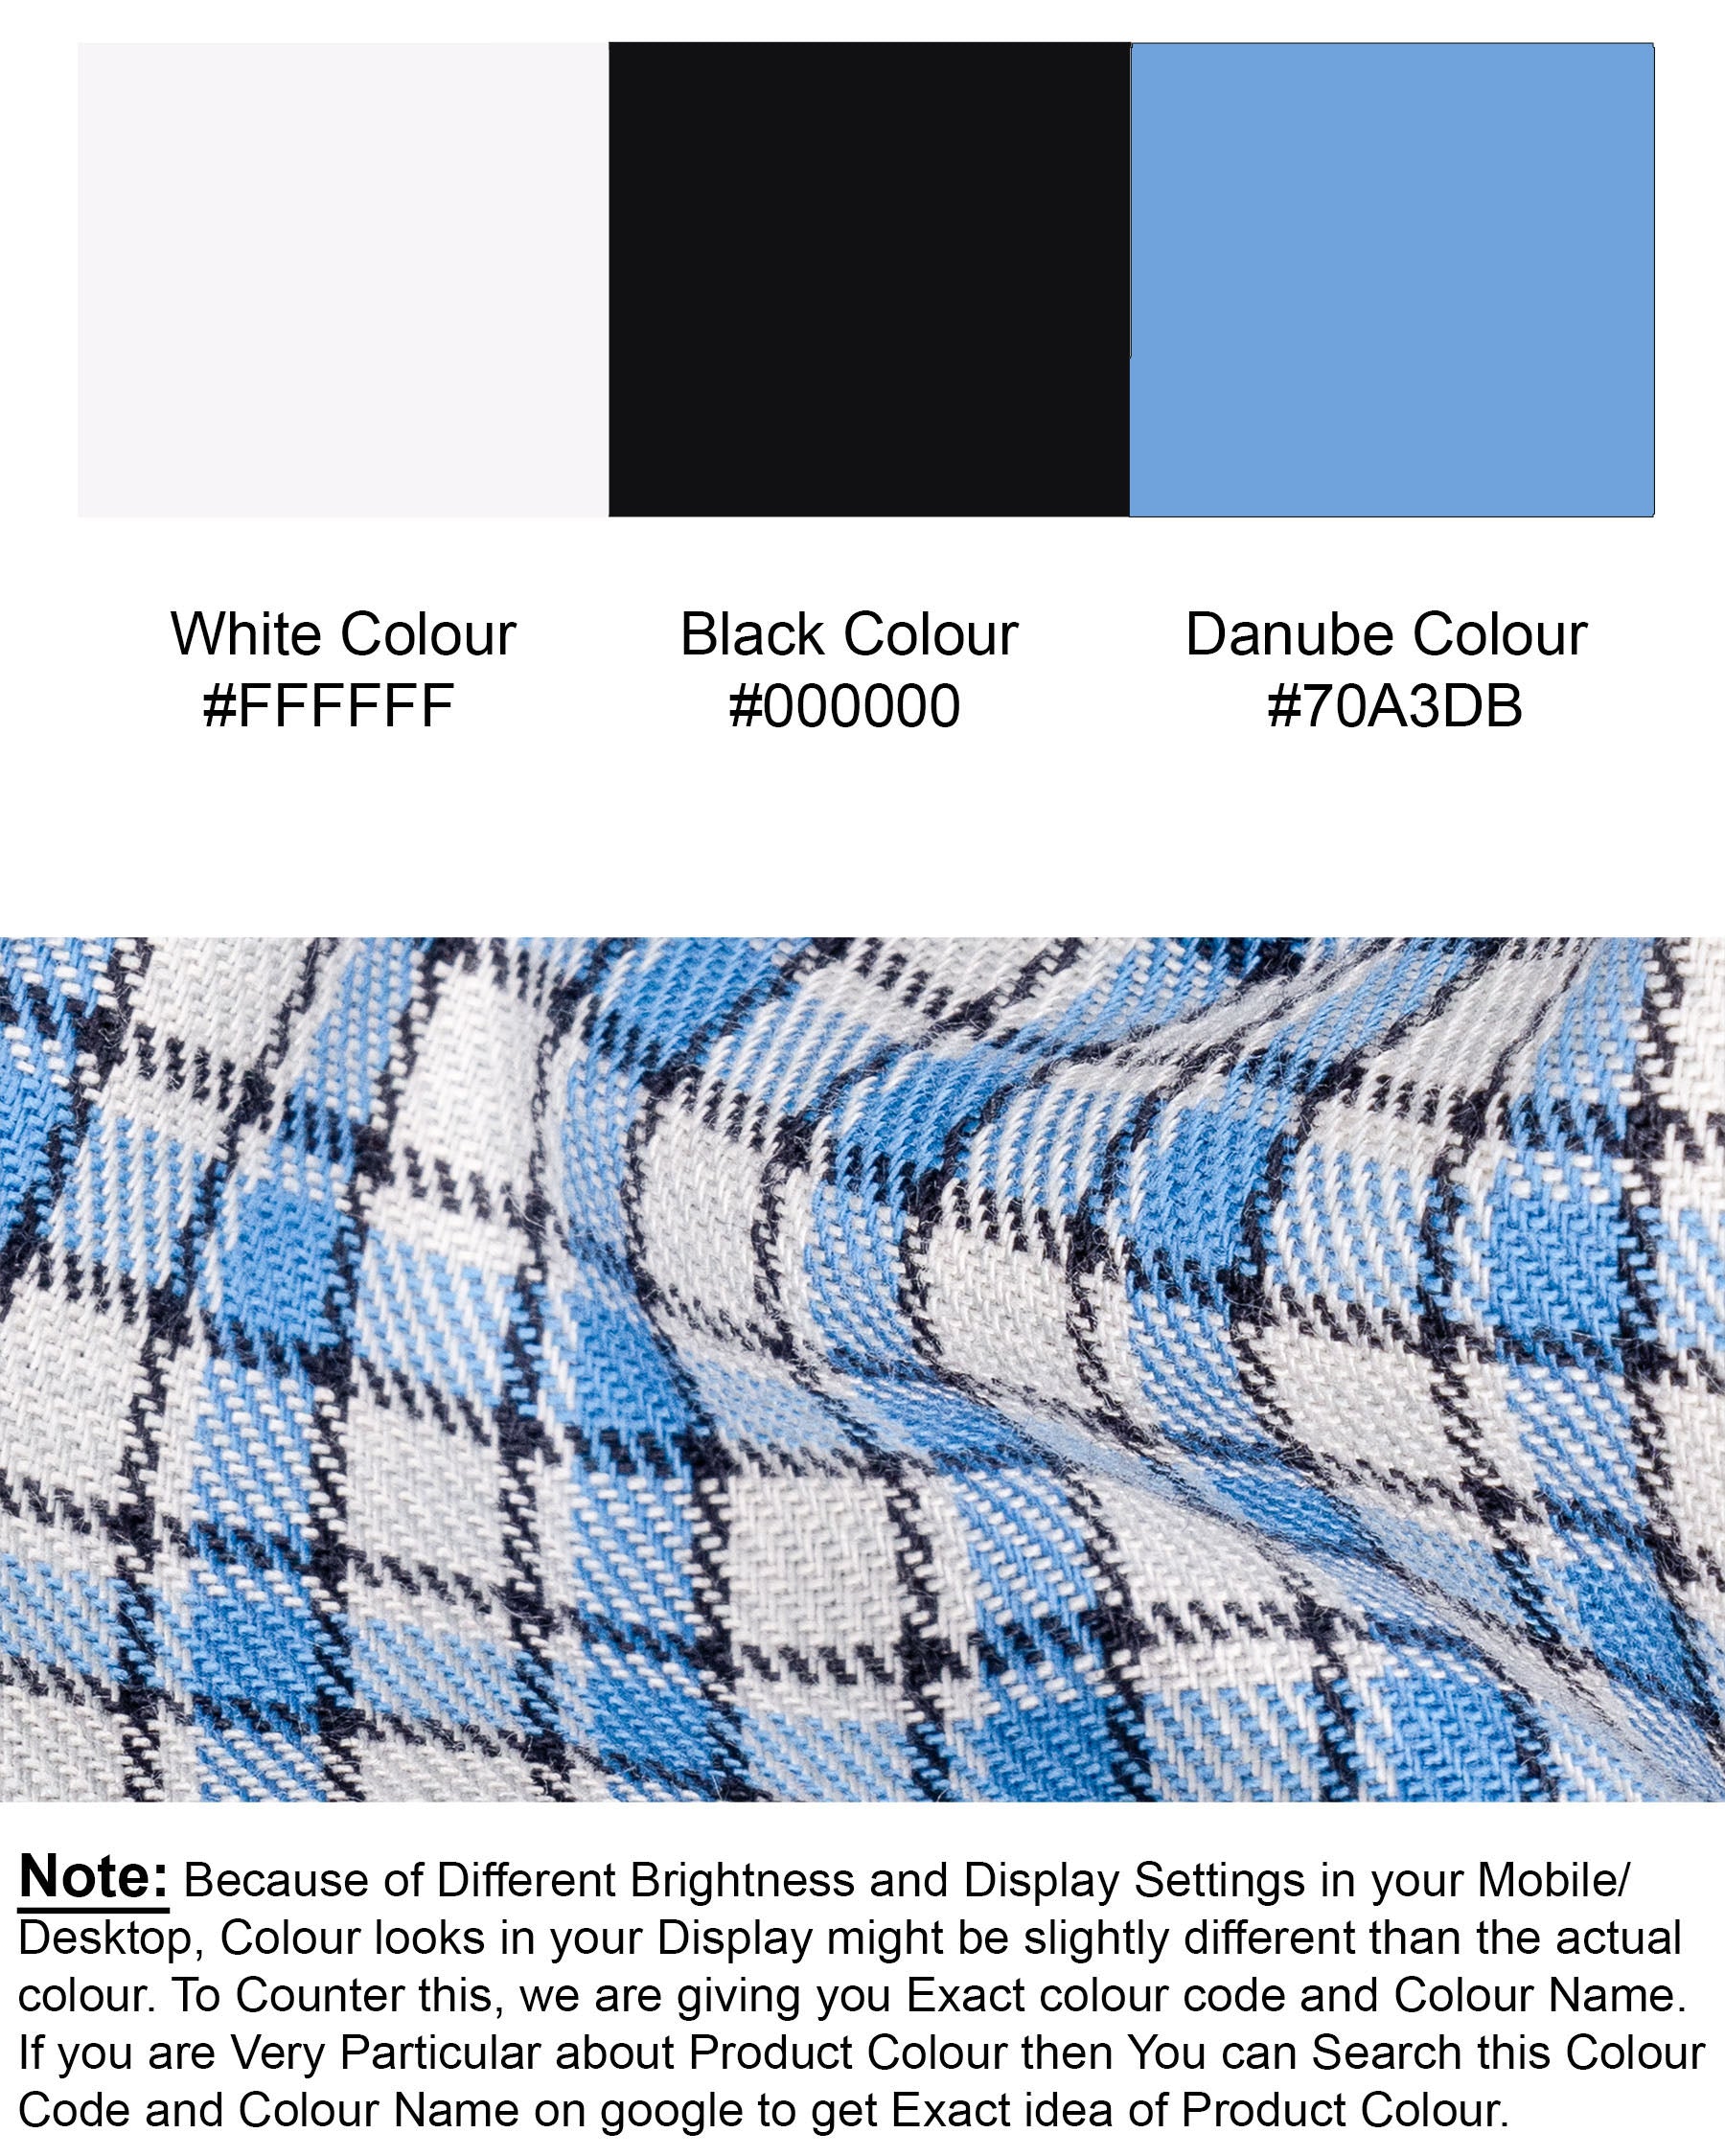 White and Danube Blue Checkered Heavyweight Premium Cotton OverShirt 6701-BD-BLK-38,6701-BD-BLK-38,6701-BD-BLK-39,6701-BD-BLK-39,6701-BD-BLK-40,6701-BD-BLK-40,6701-BD-BLK-42,6701-BD-BLK-42,6701-BD-BLK-44,6701-BD-BLK-44,6701-BD-BLK-46,6701-BD-BLK-46,6701-BD-BLK-48,6701-BD-BLK-48,6701-BD-BLK-50,6701-BD-BLK-50,6701-BD-BLK-52,6701-BD-BLK-52